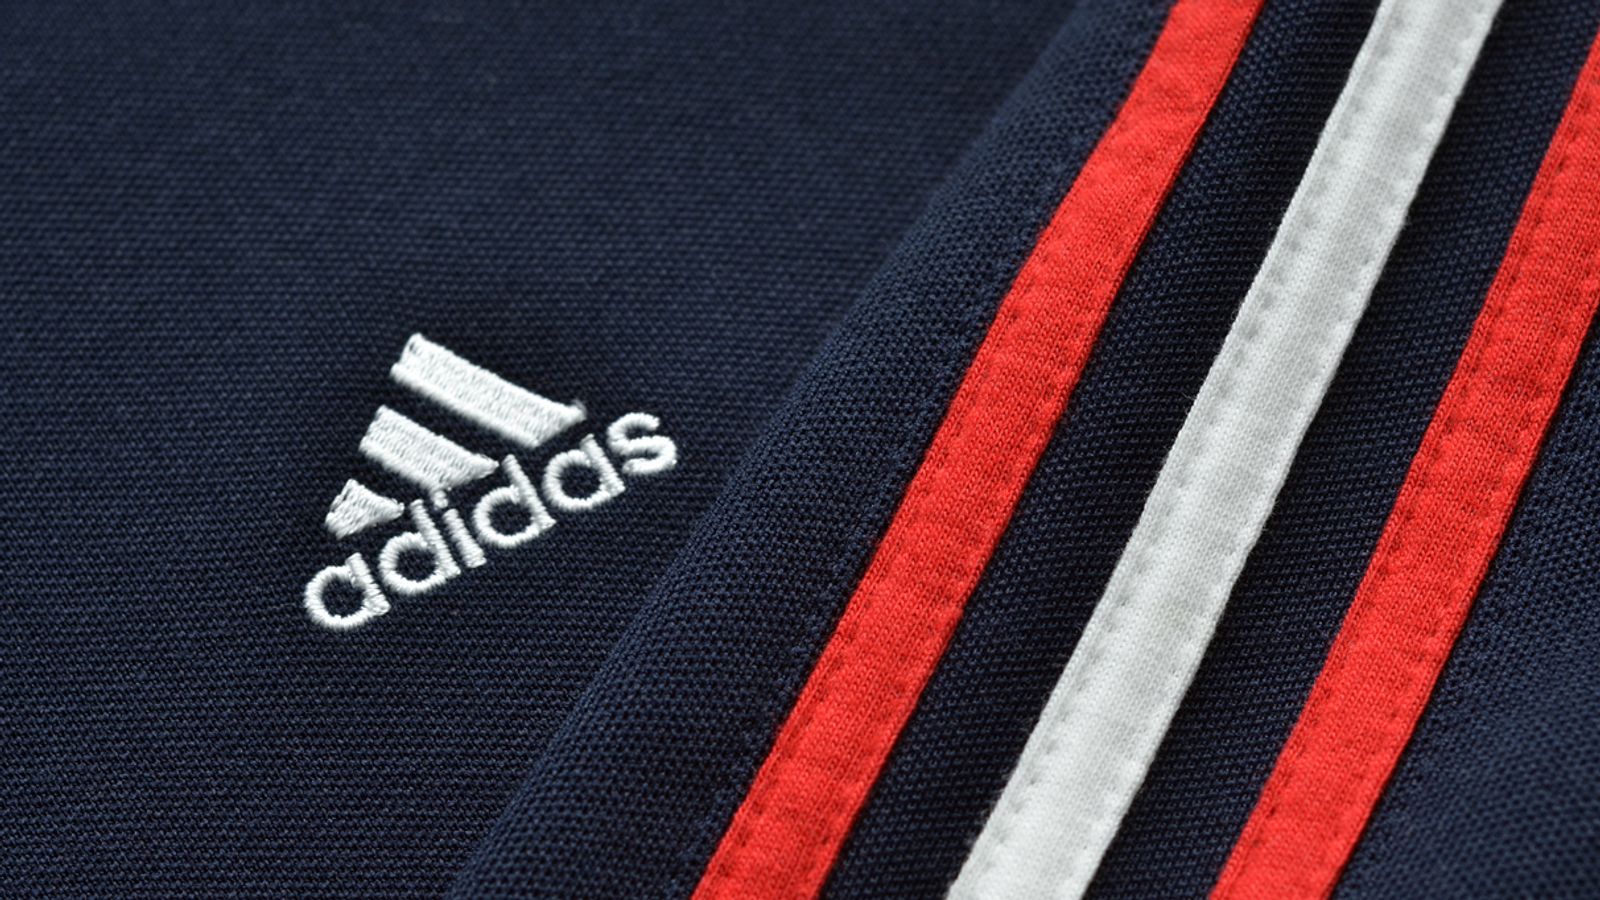 Adidas loses bid to trademark its three-stripe logo, Business News